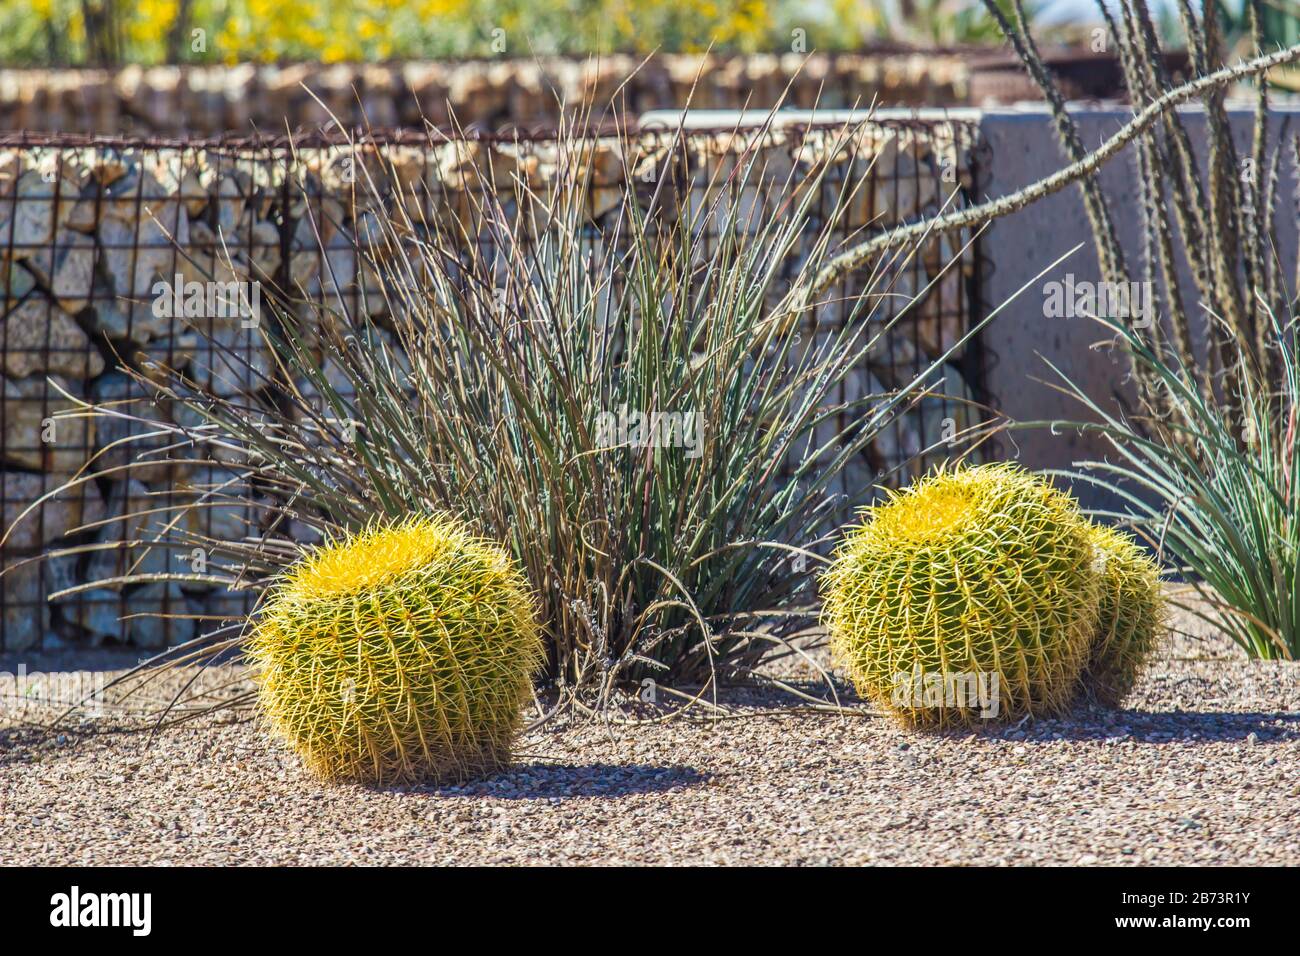 Small Colorful Barrel Cactus In Desert Garden Stock Photo